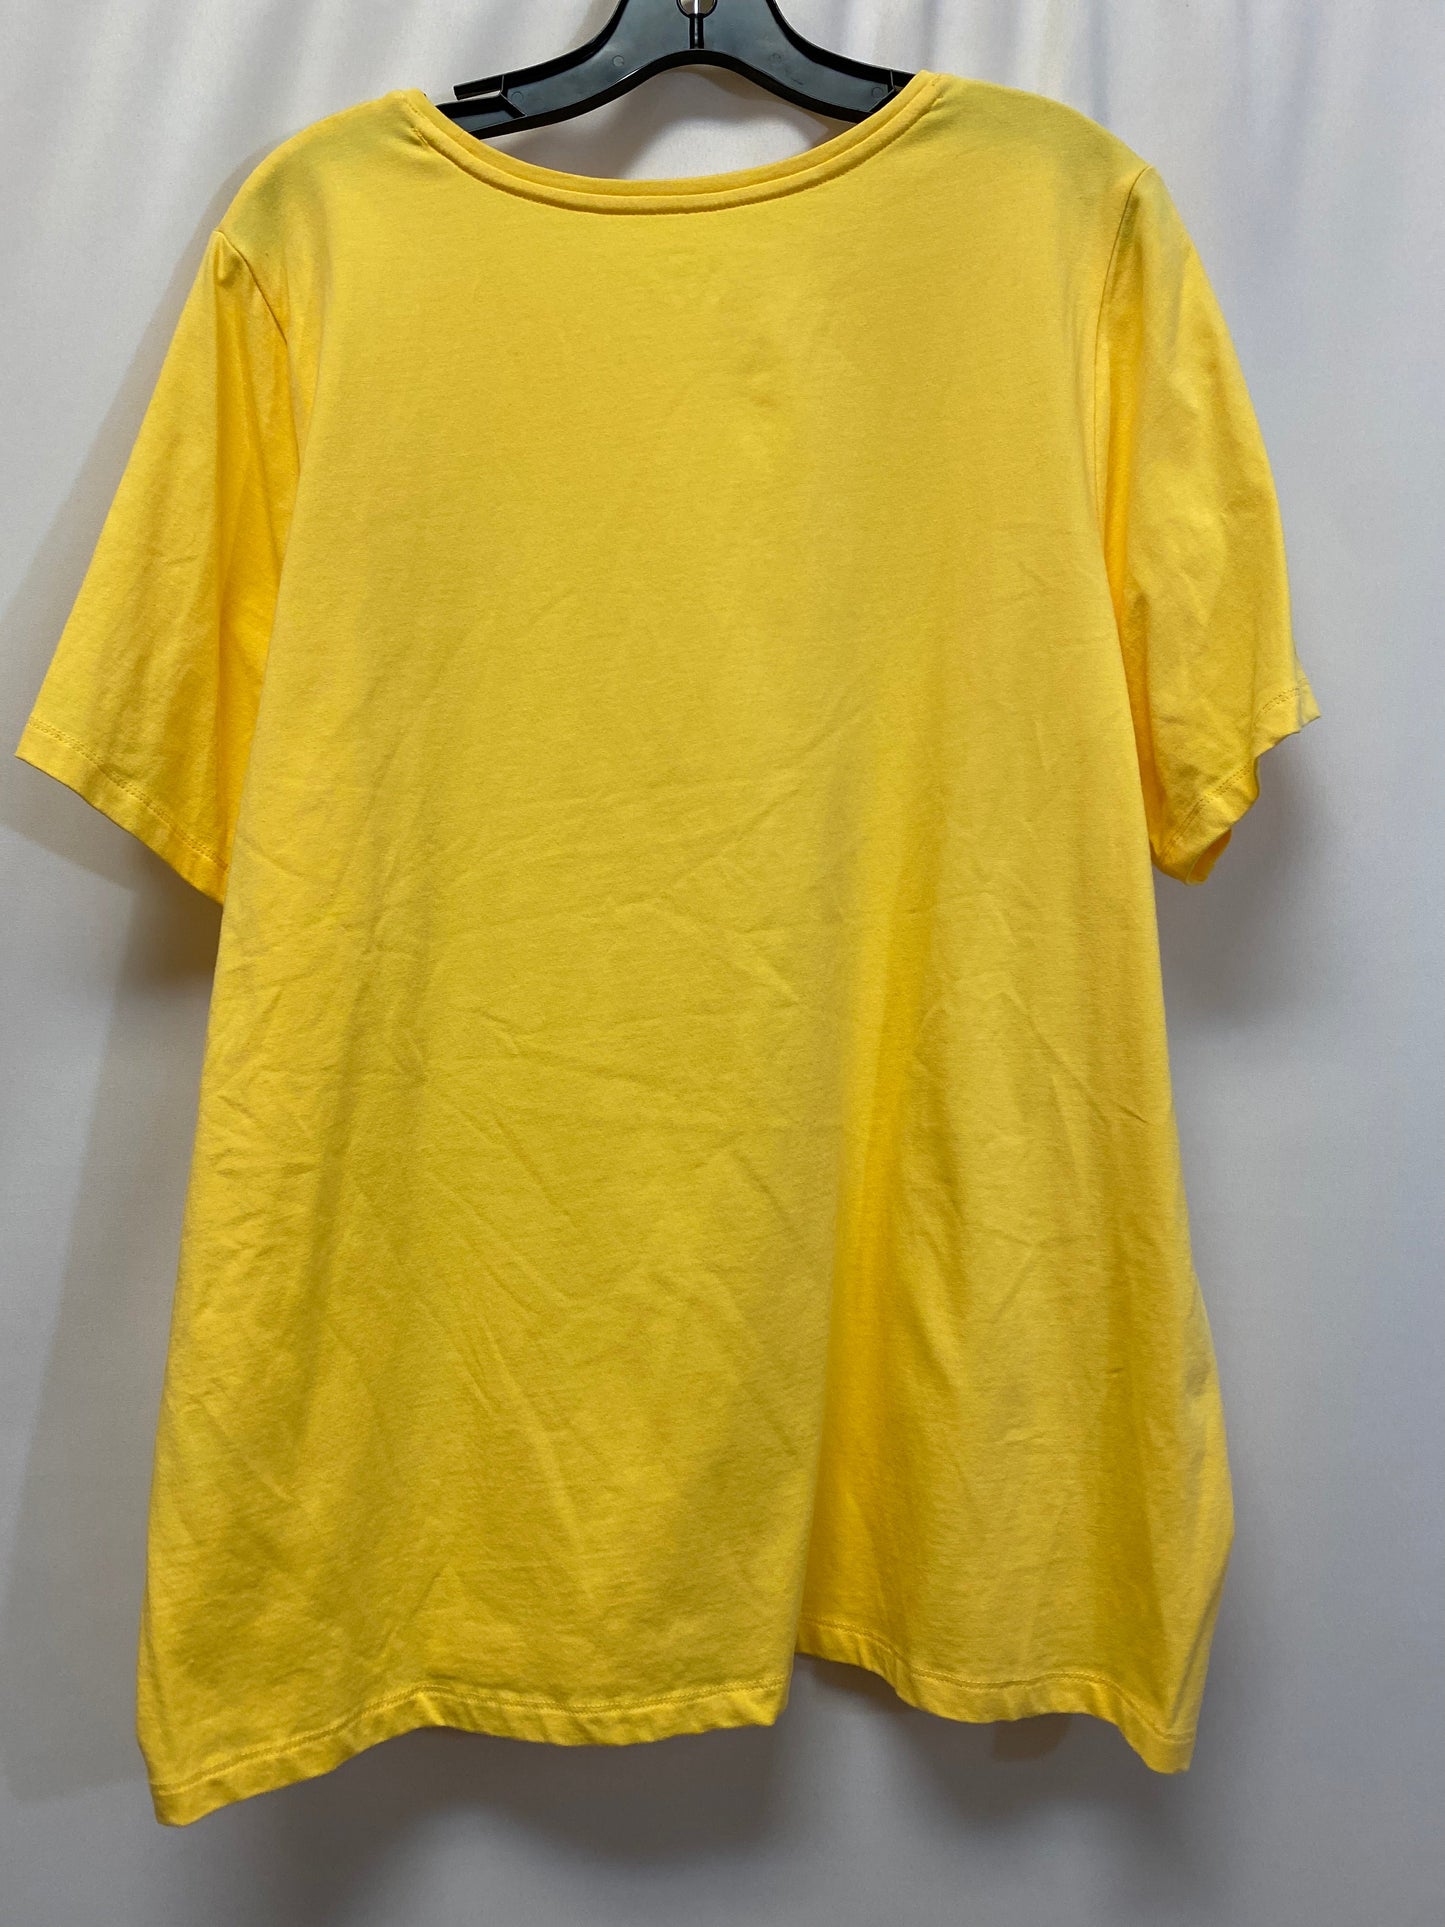 Yellow Top Short Sleeve Cj Banks, Size 2x